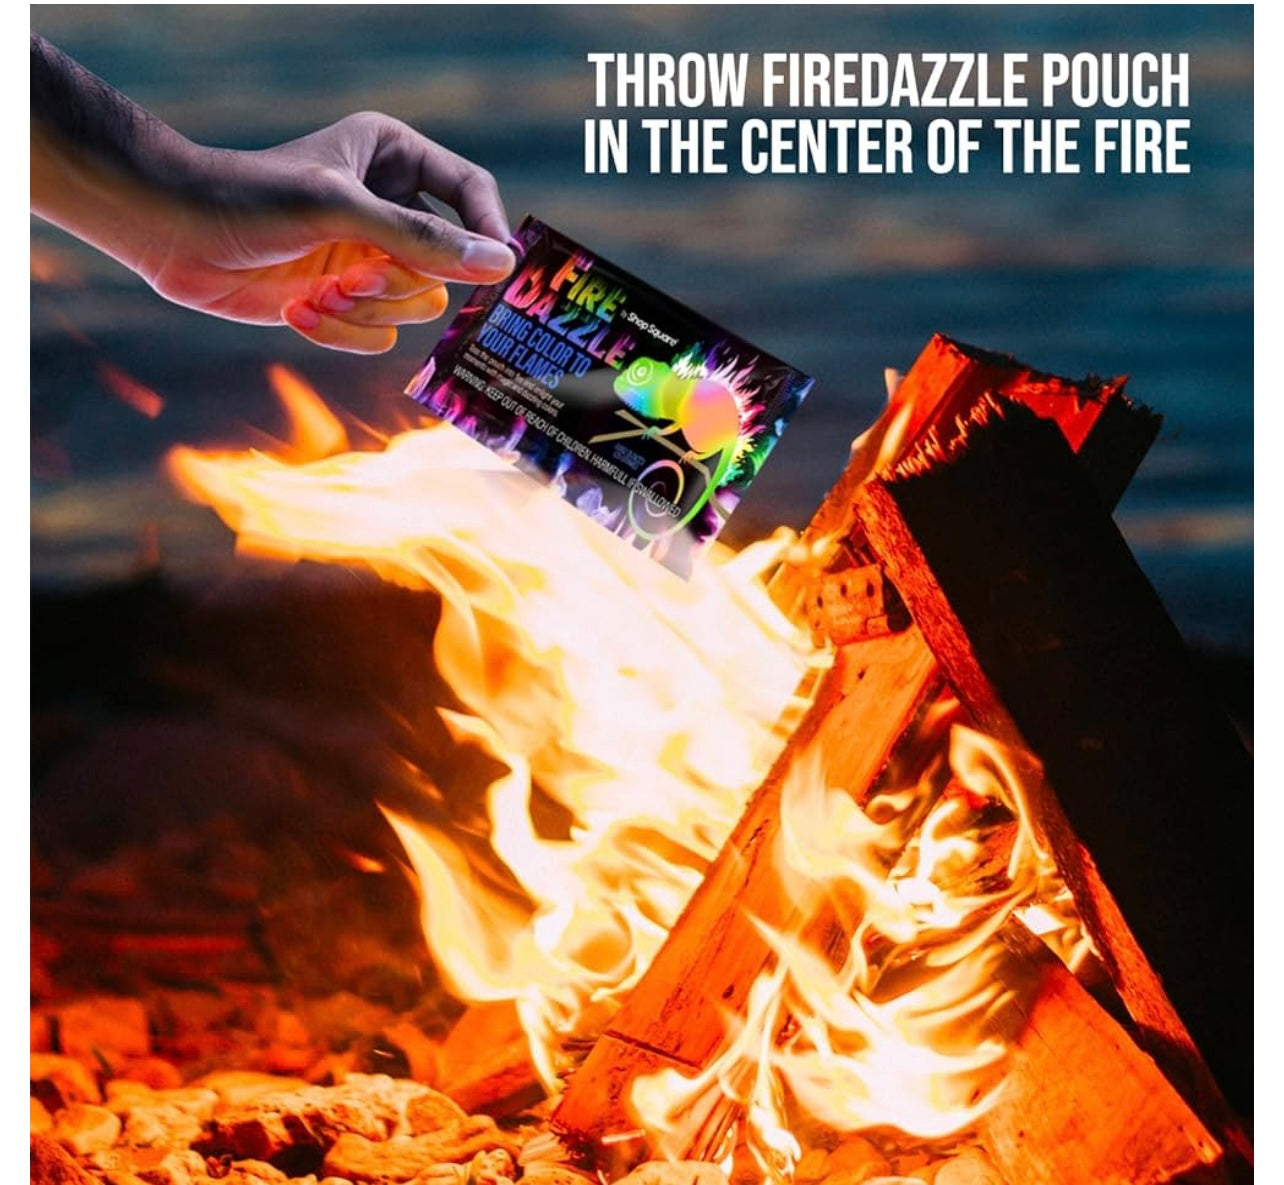 Fire Dazzle Pouch